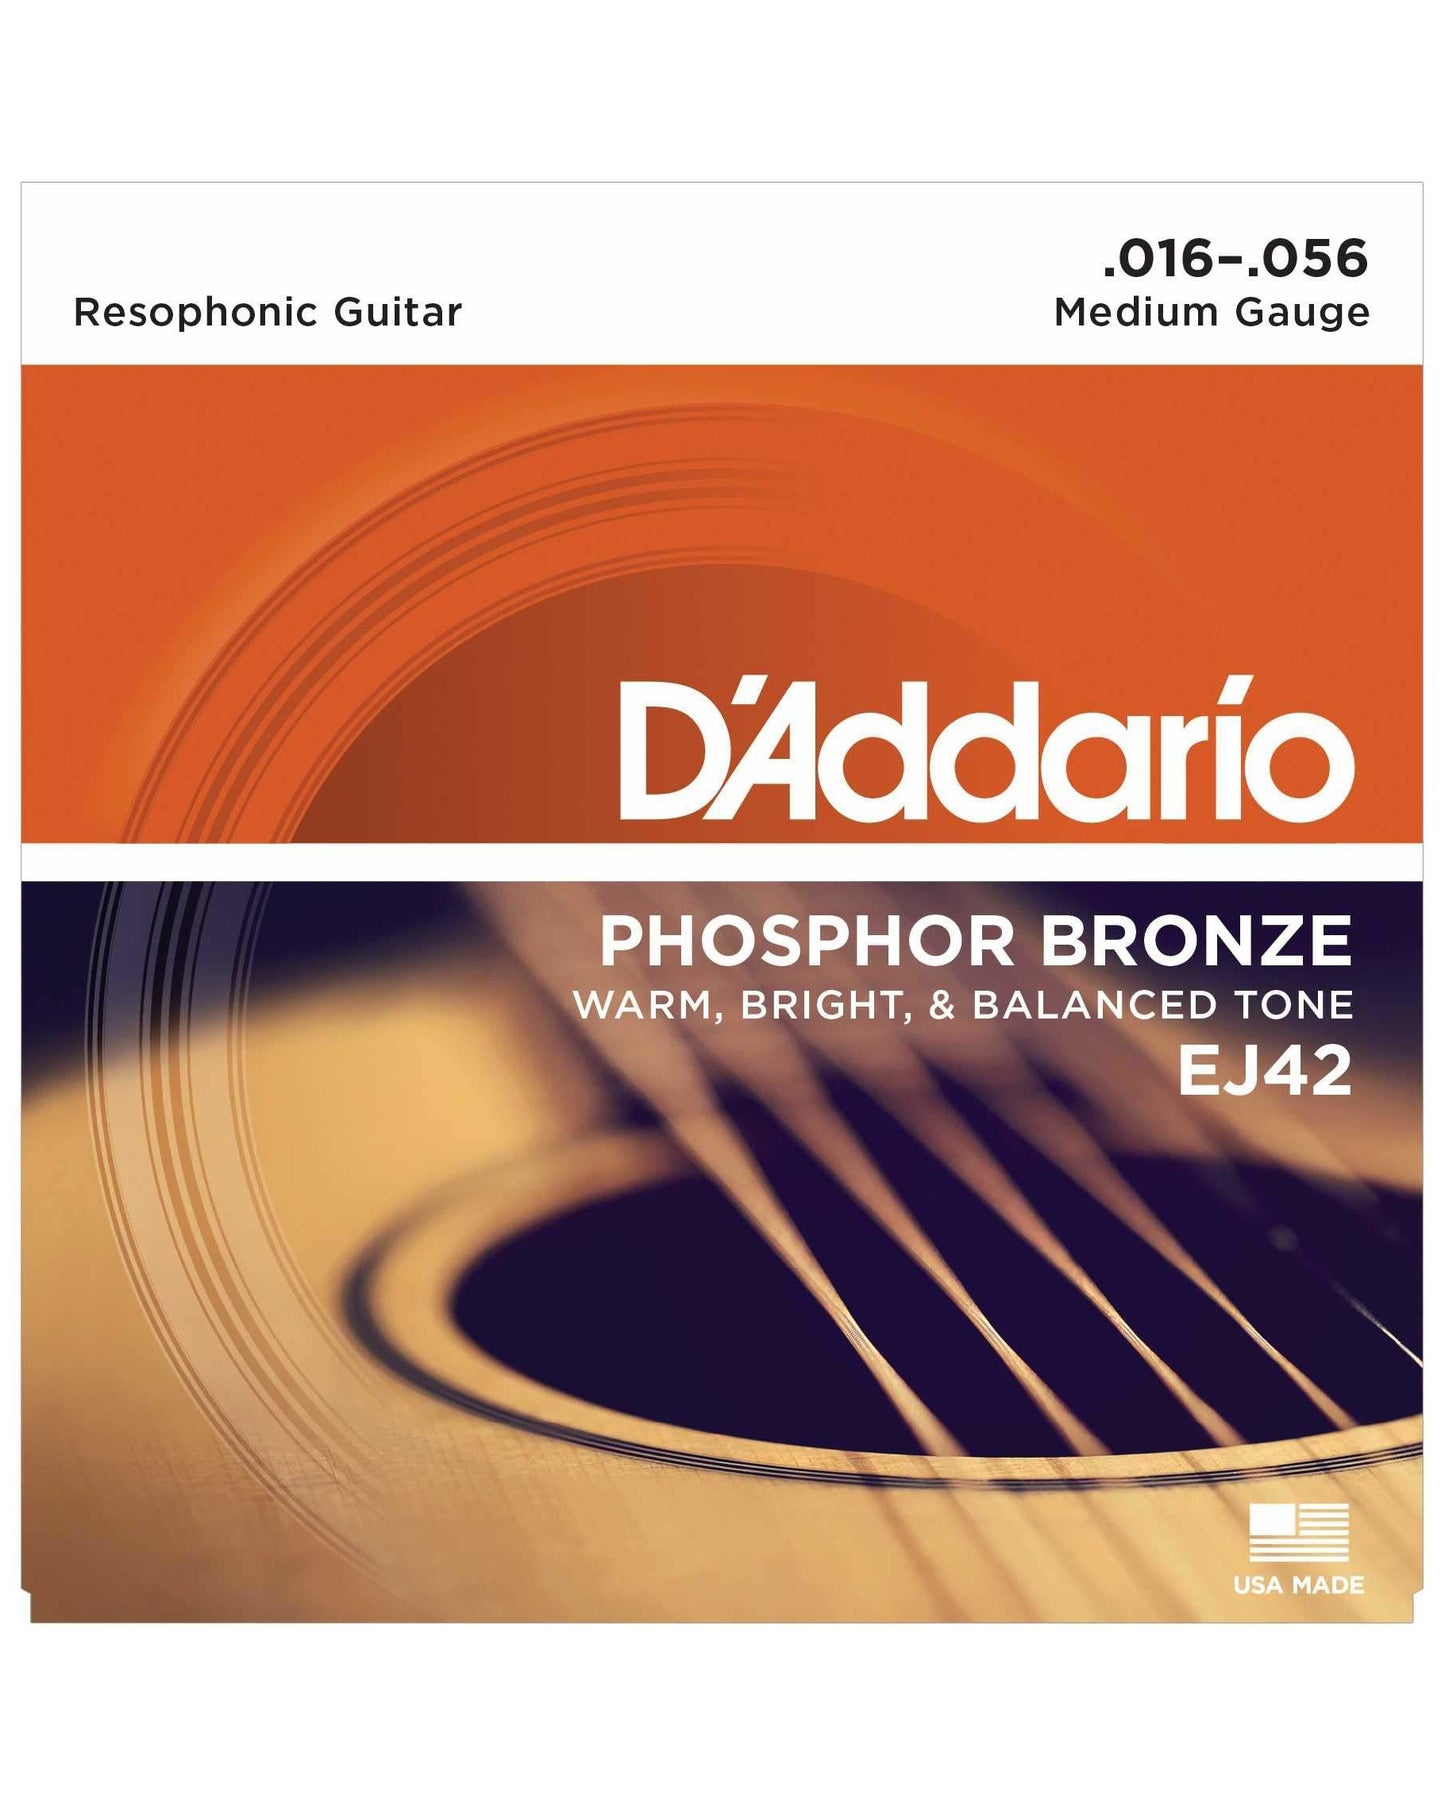 Front of D'Addario EJ42 Phosphor Bronze Medium Gauge Resophonic Guitar Strings